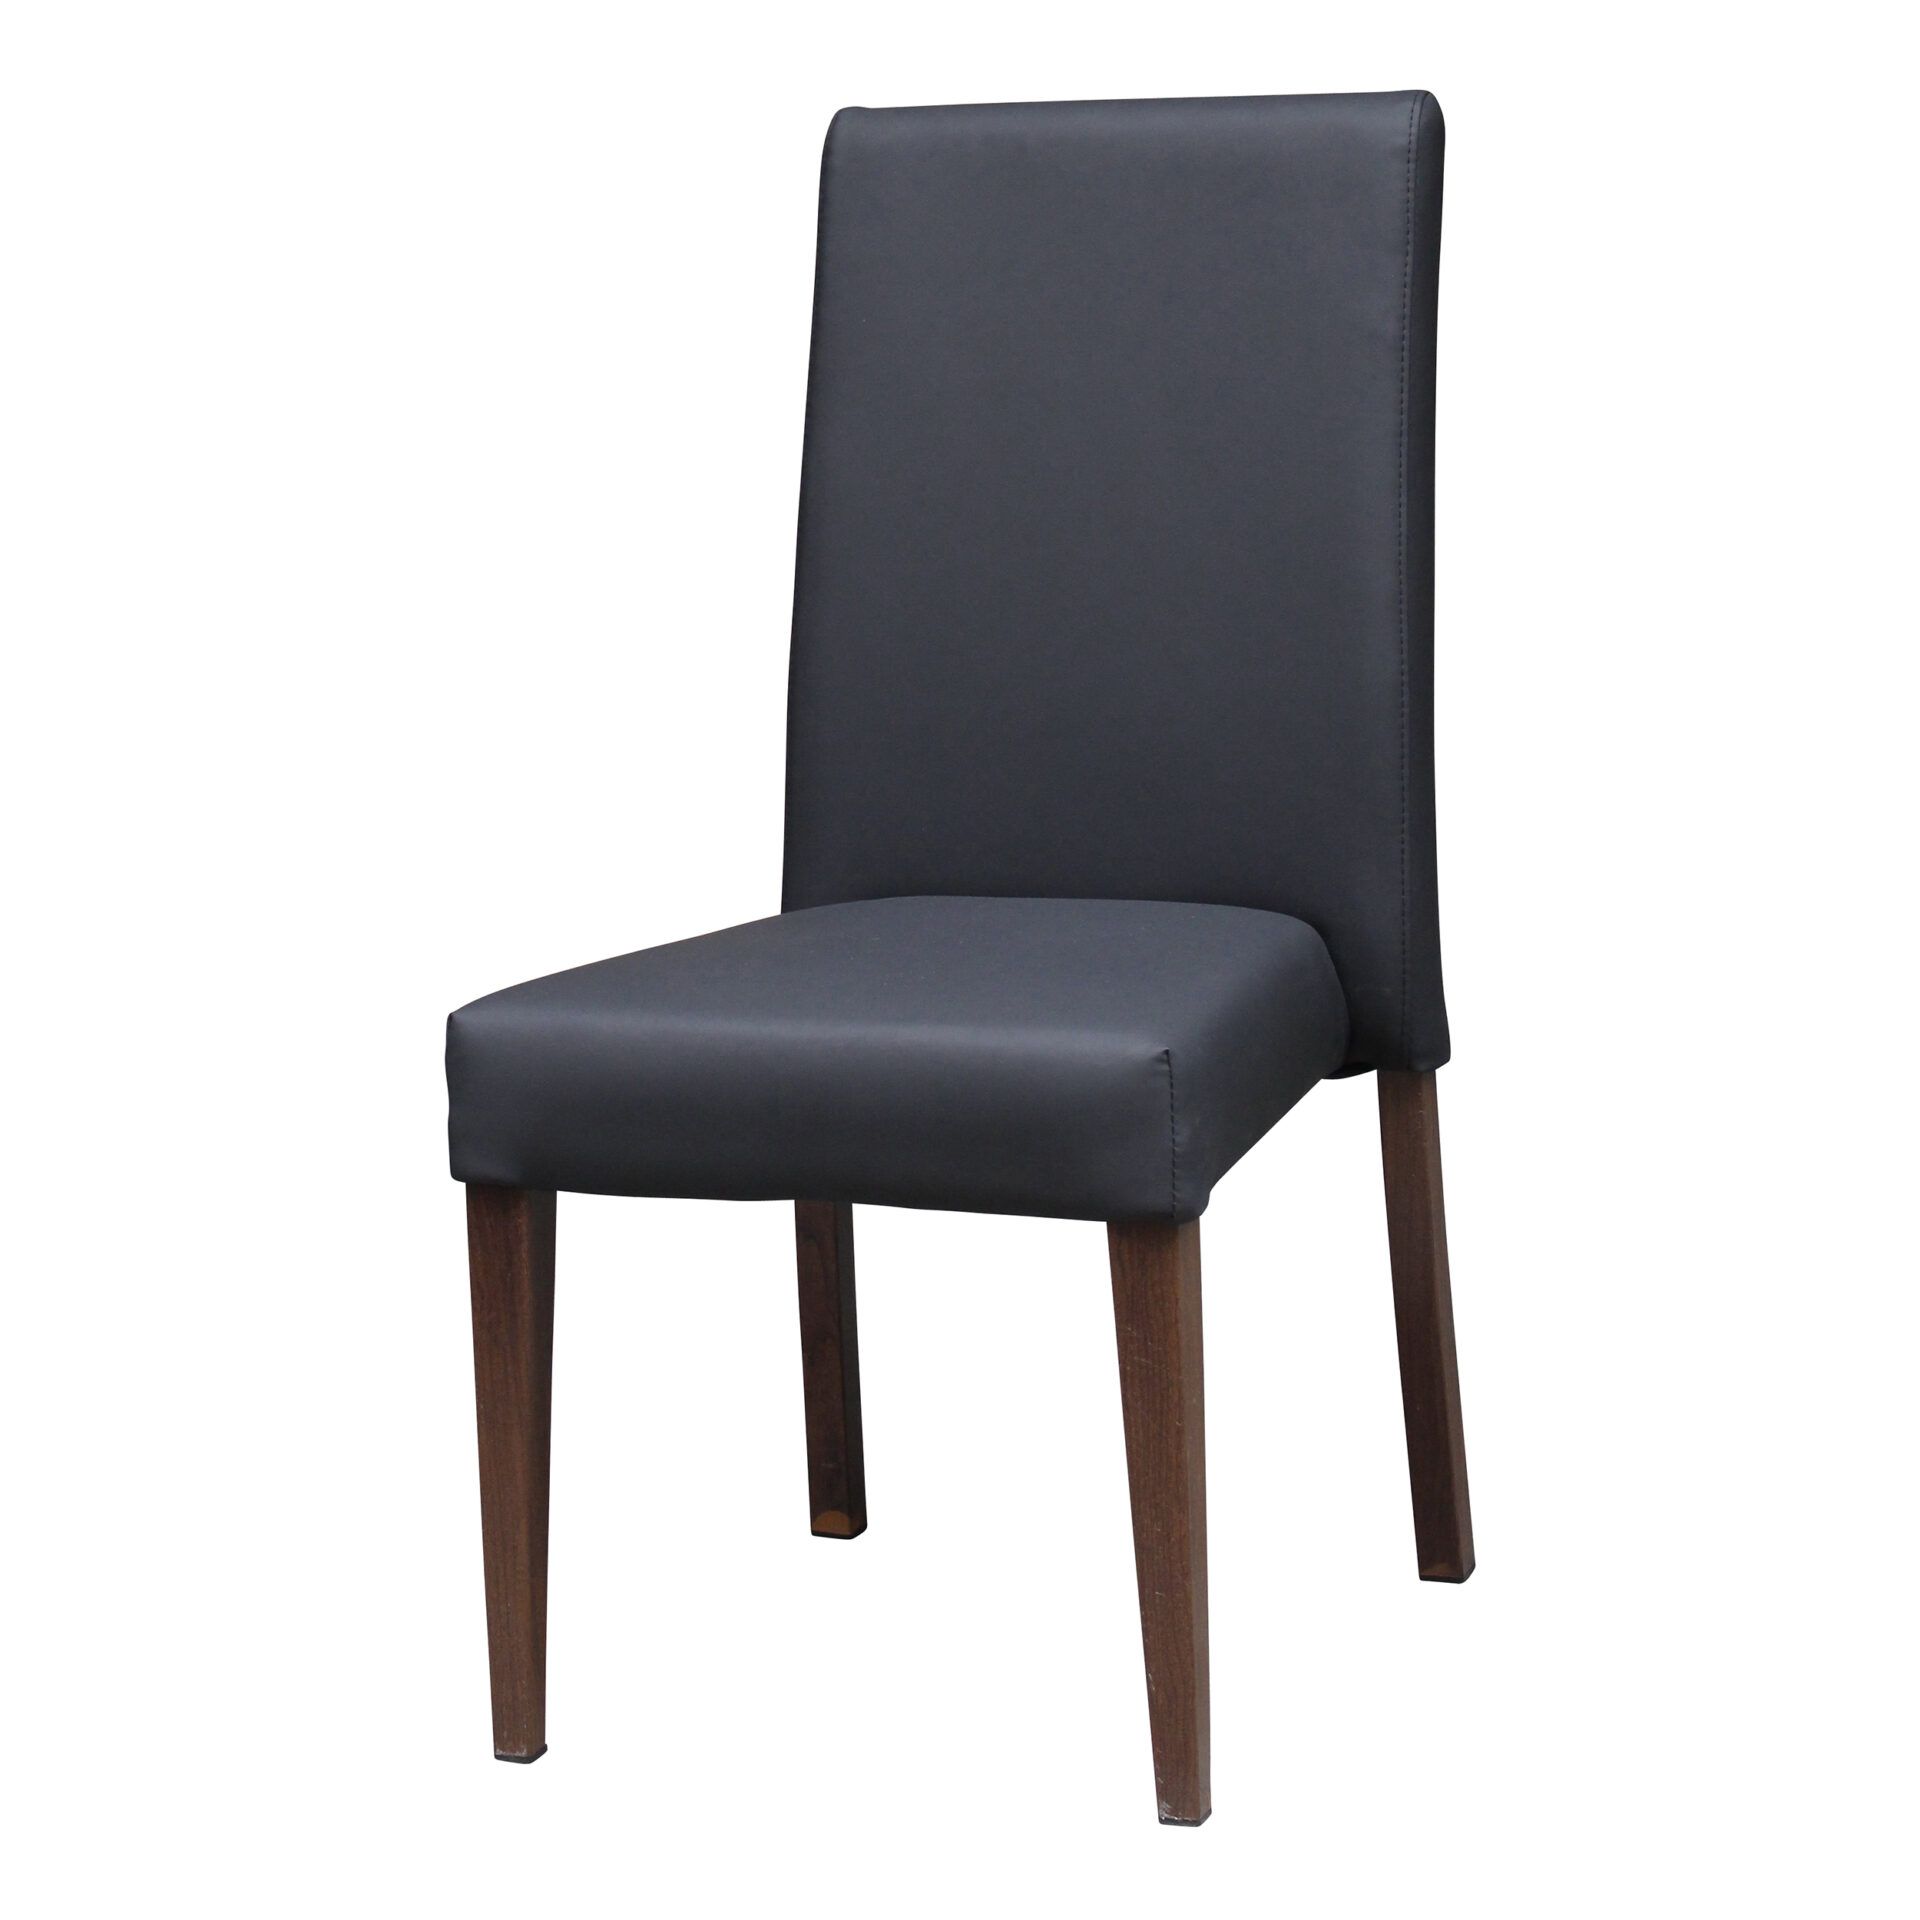 London Chair Black 1 1